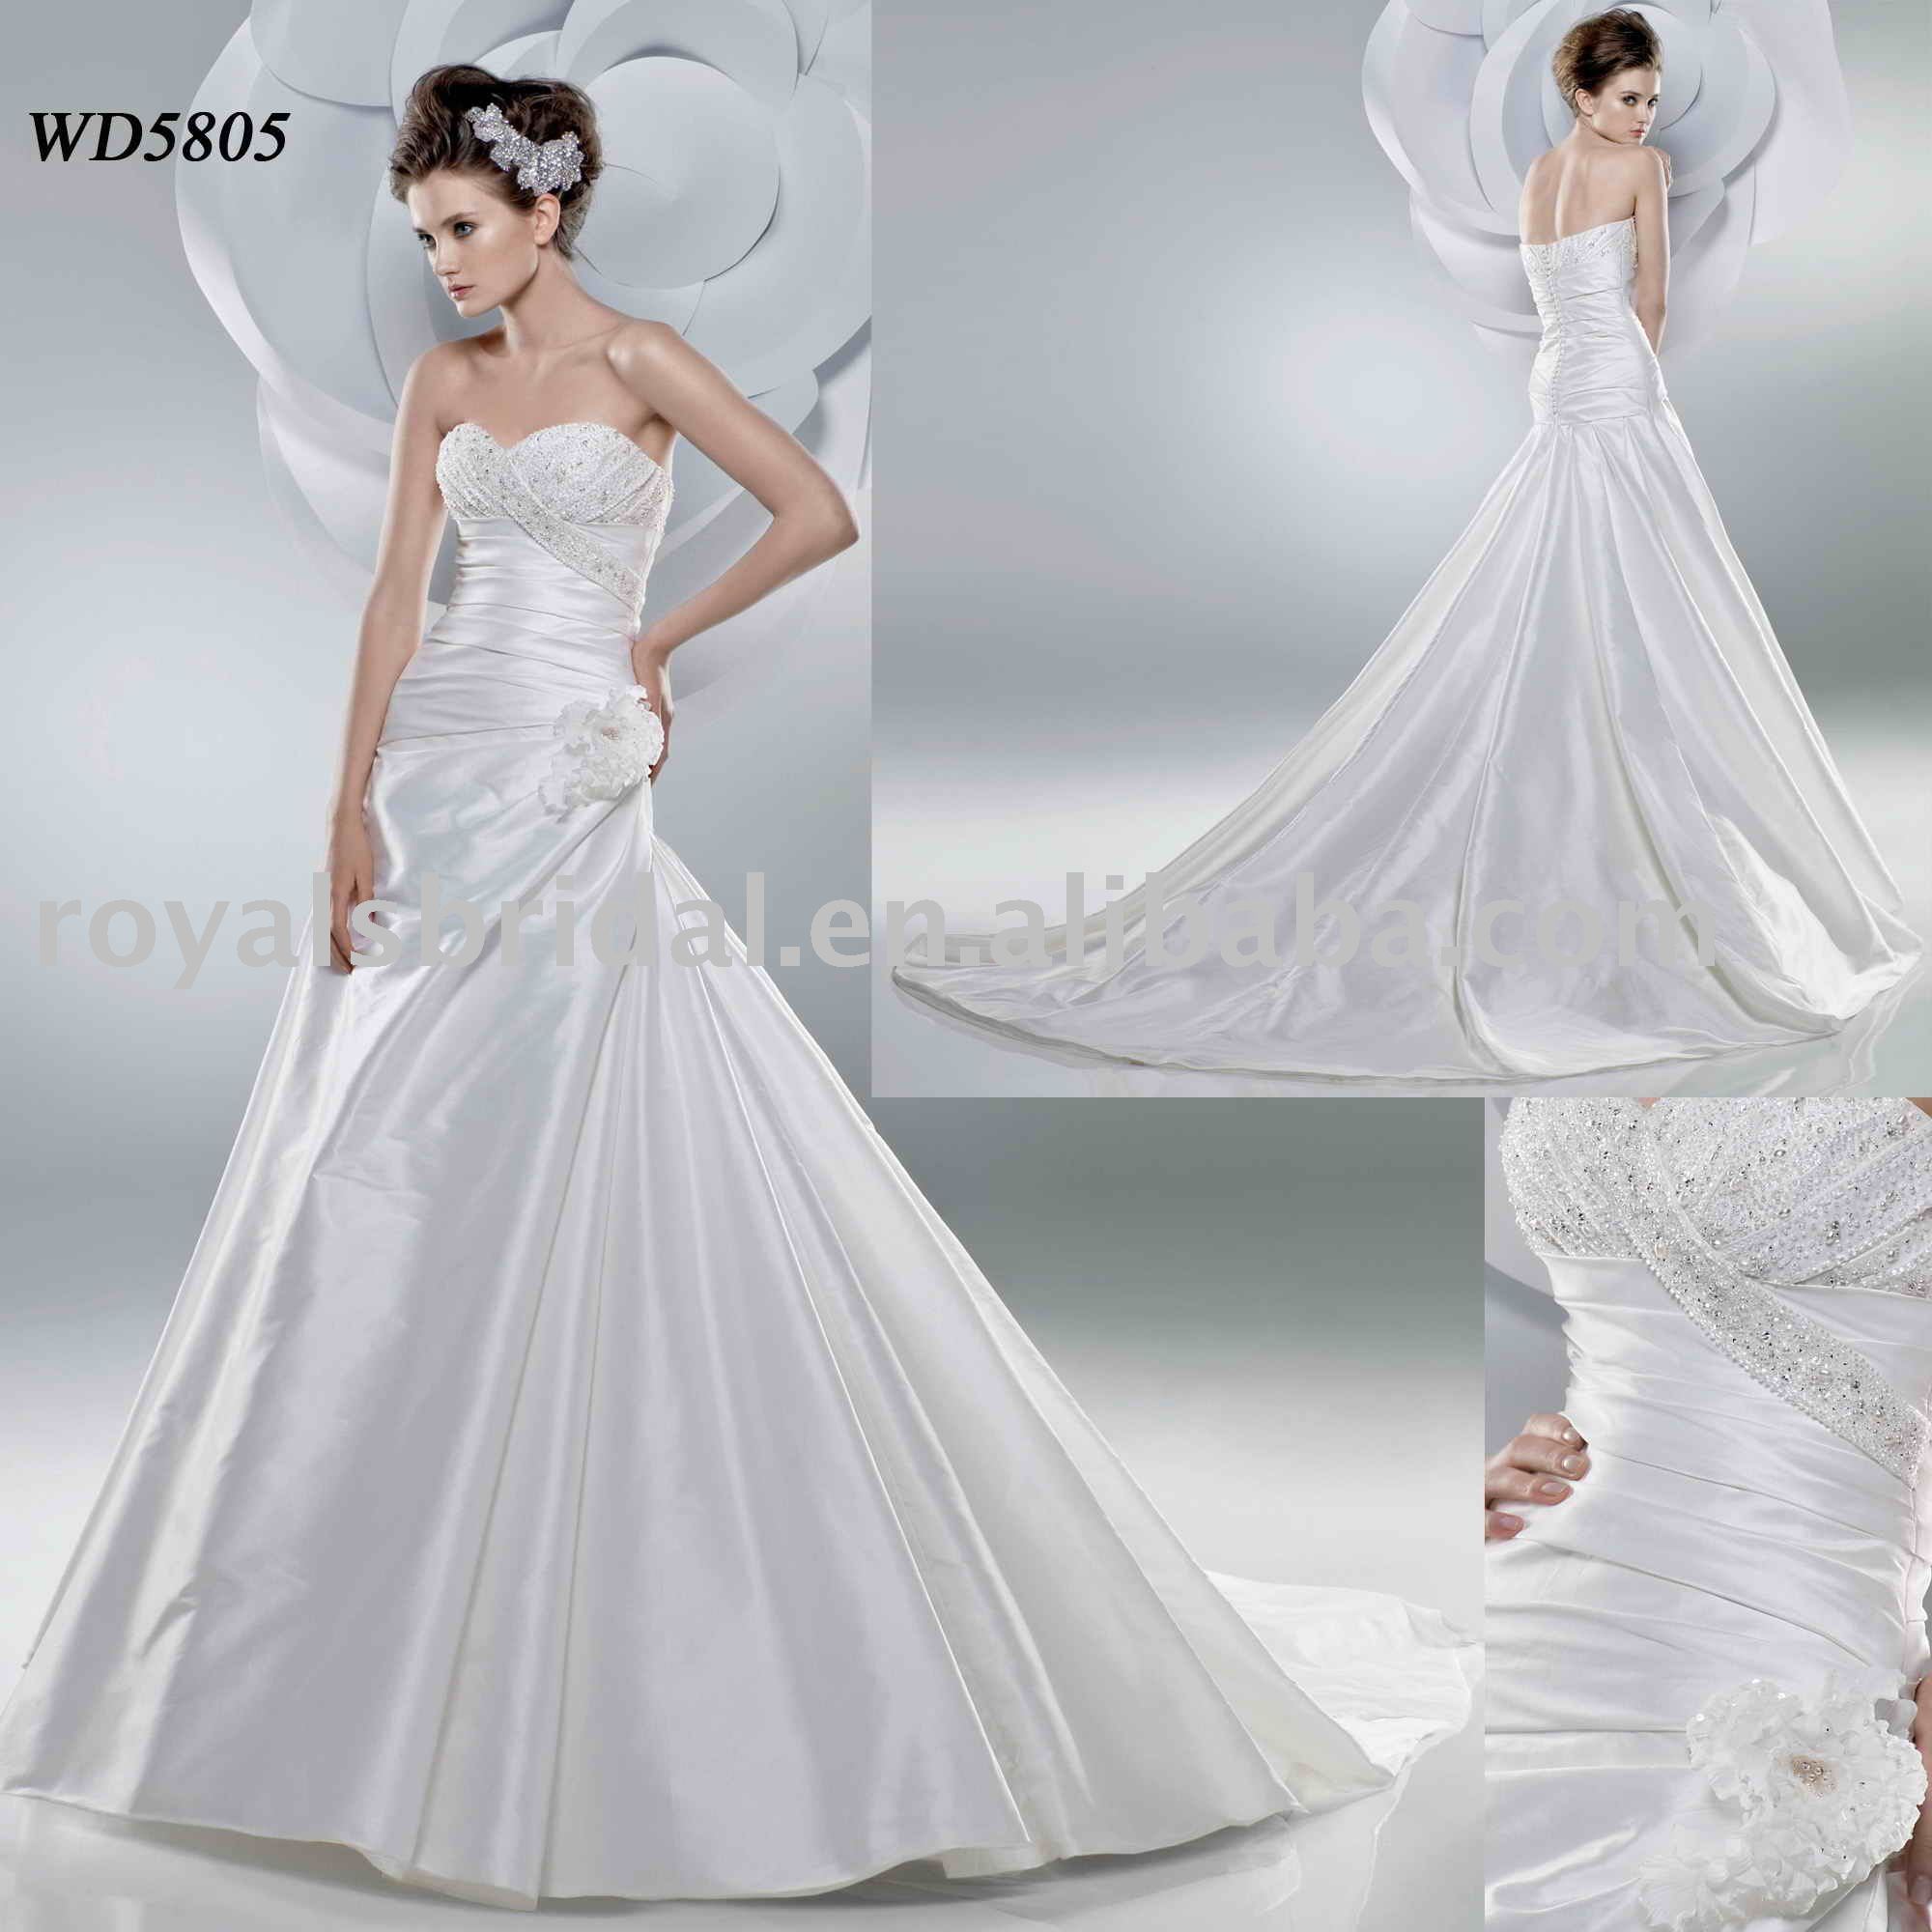 Design Wedding Dress 2011